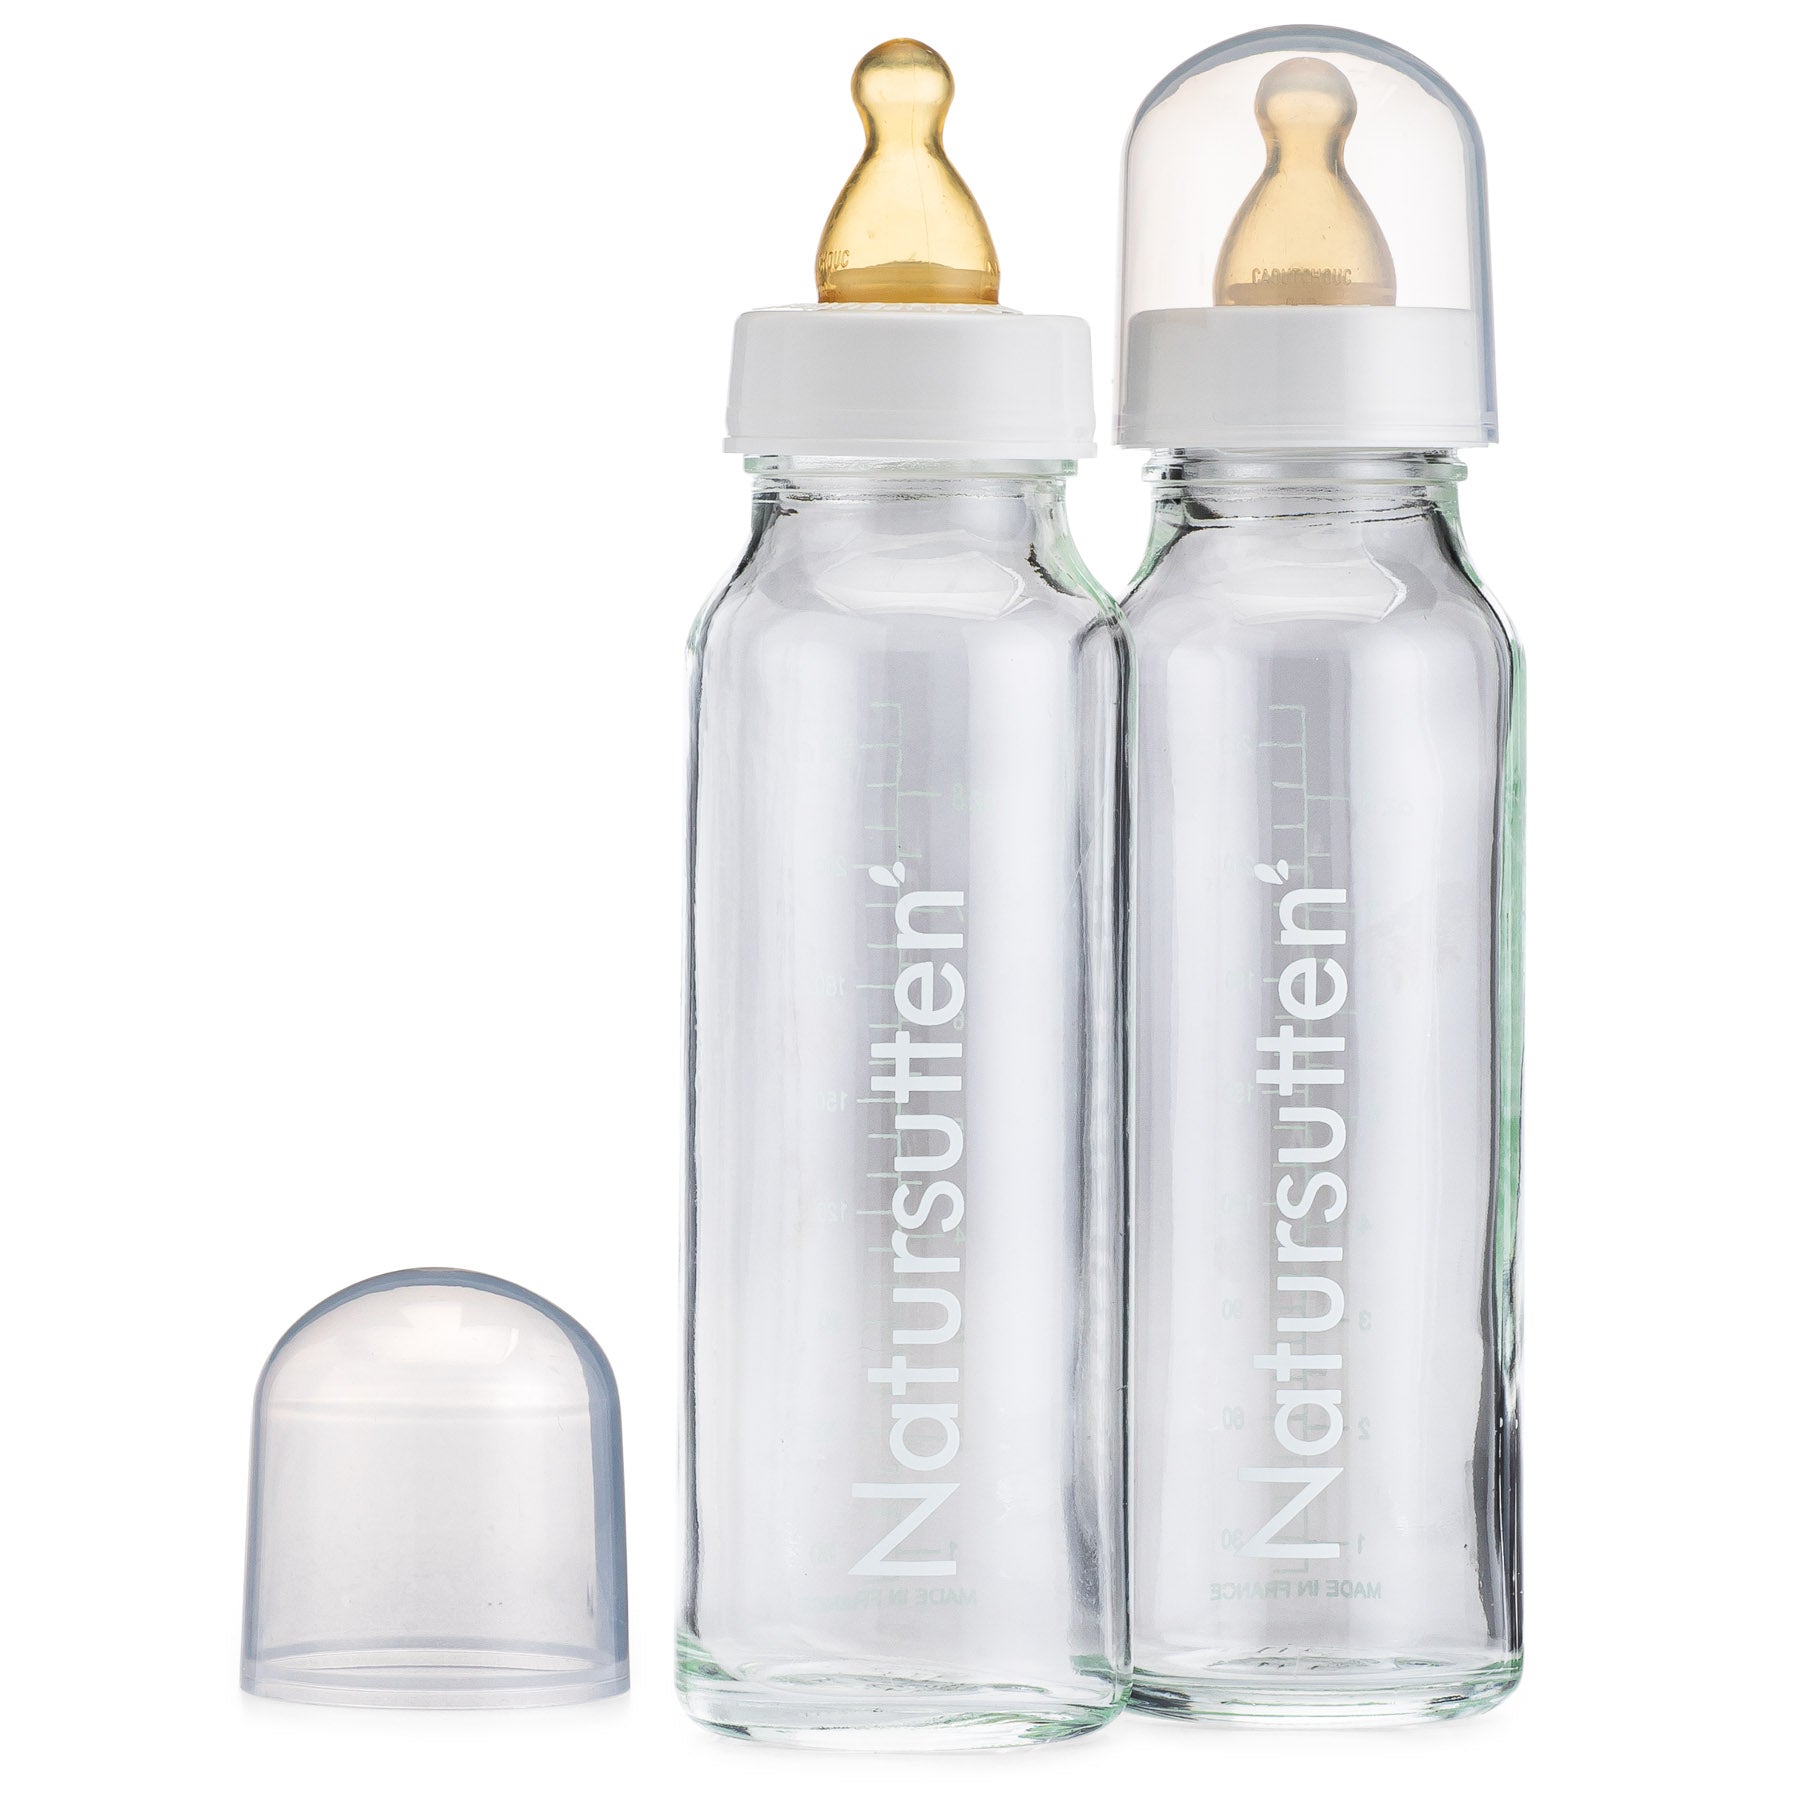 Natursutten's Glass Baby Bottle - 8 oz